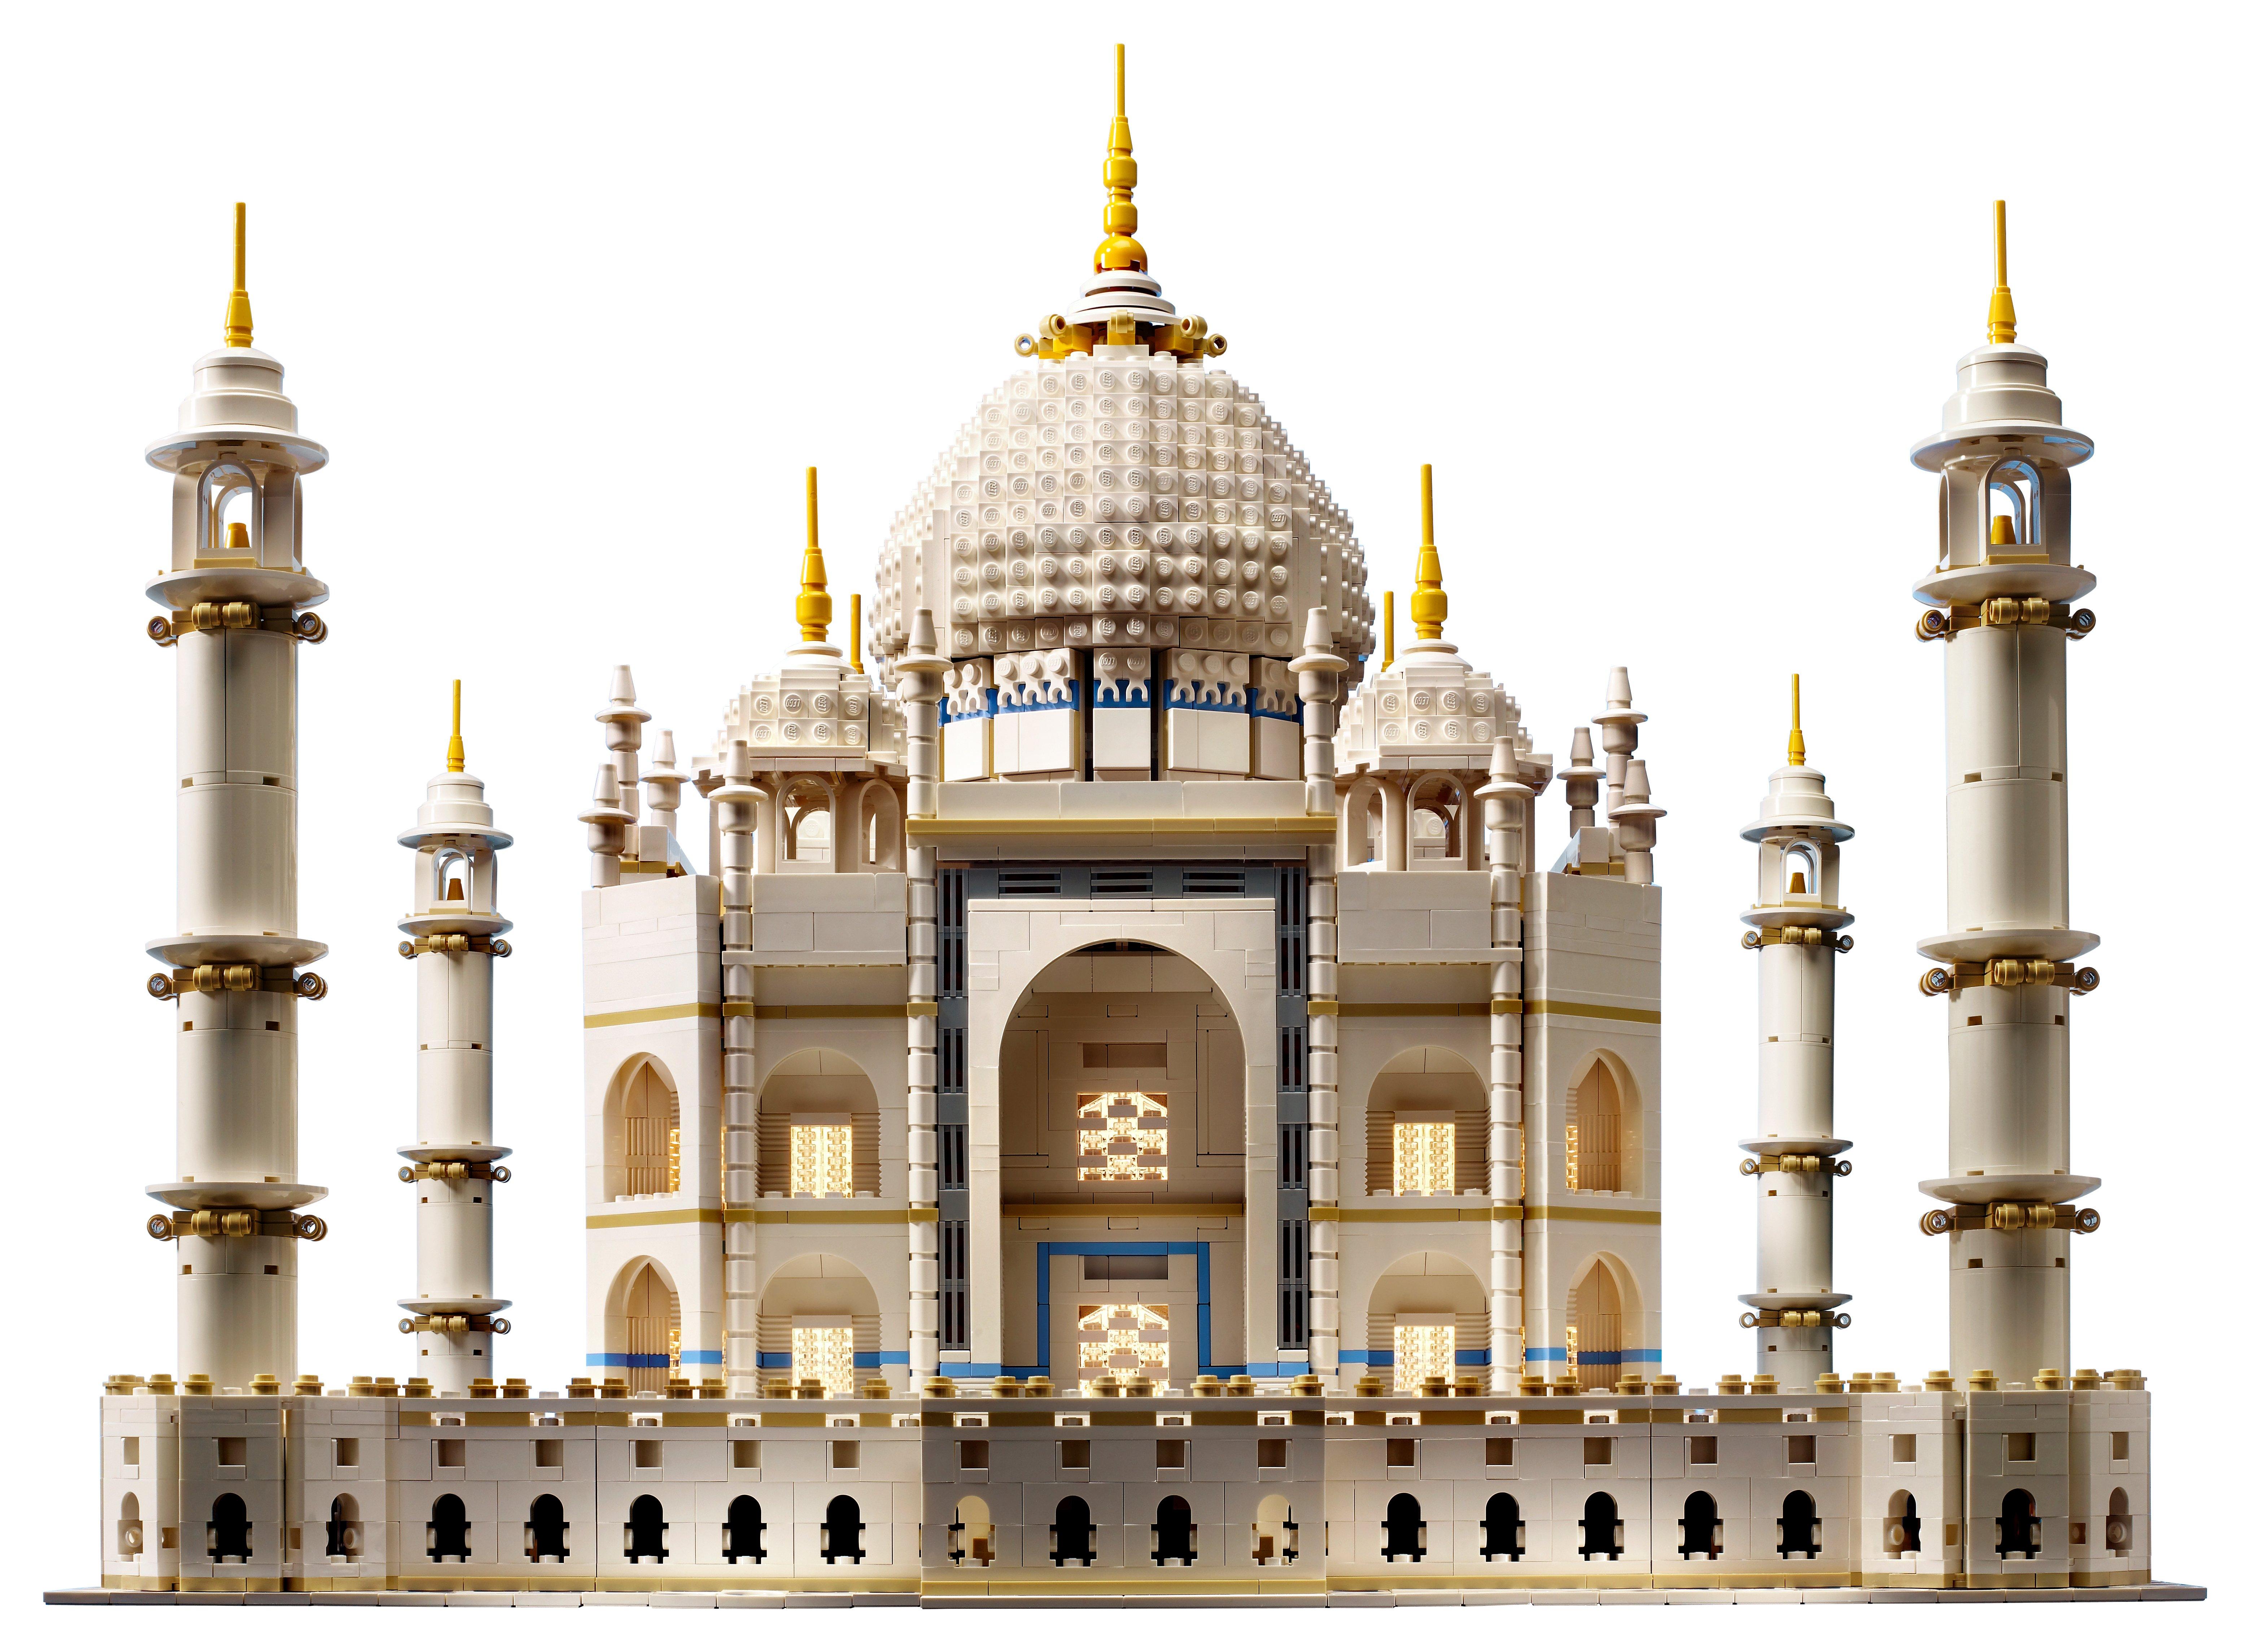 LEGO®  10256 Taj Mahal 